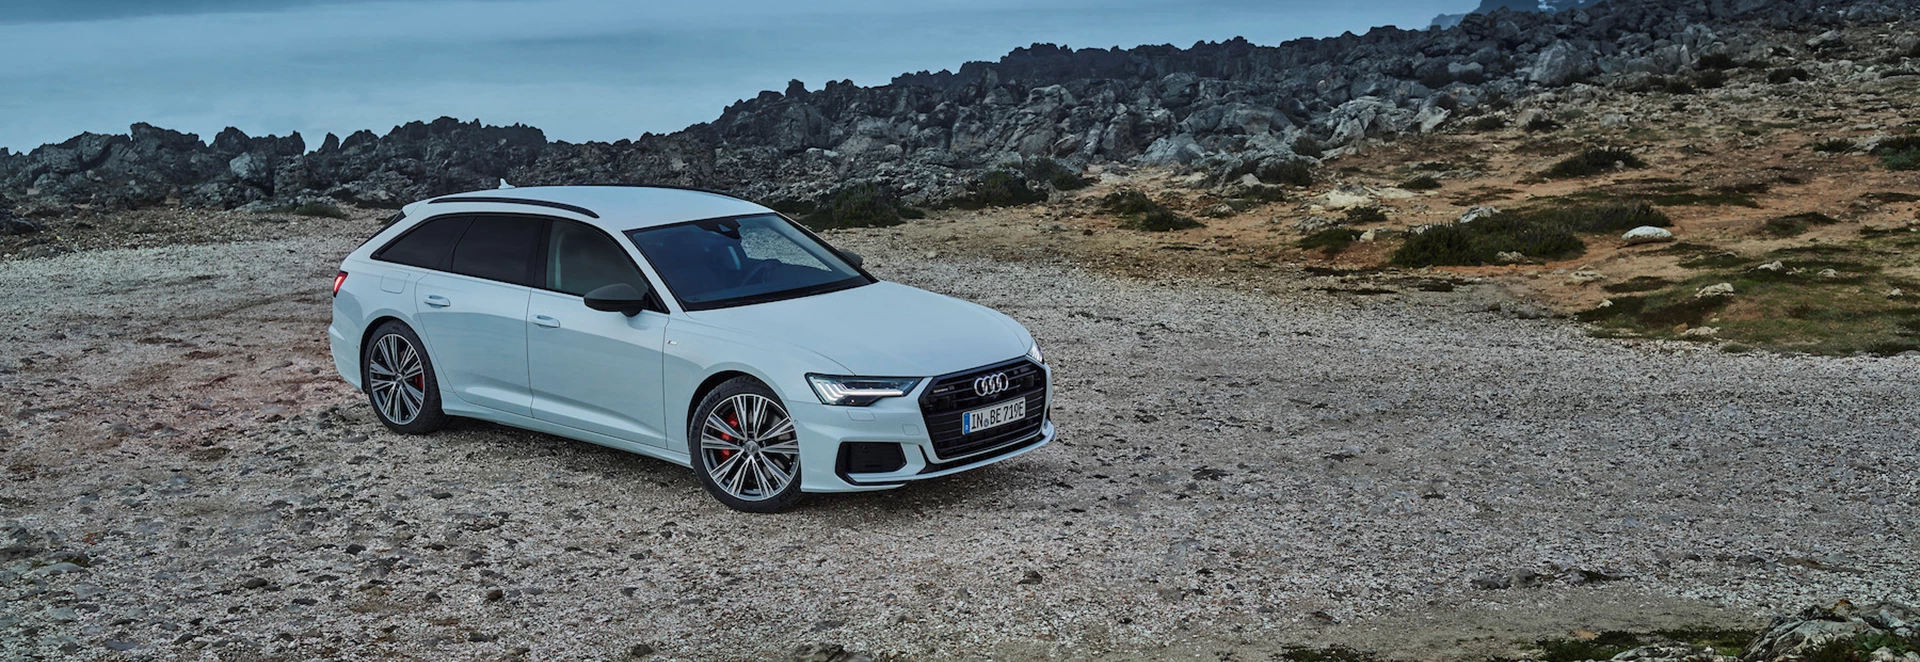 Audi unveils new plug-in hybrid A6 Avant 